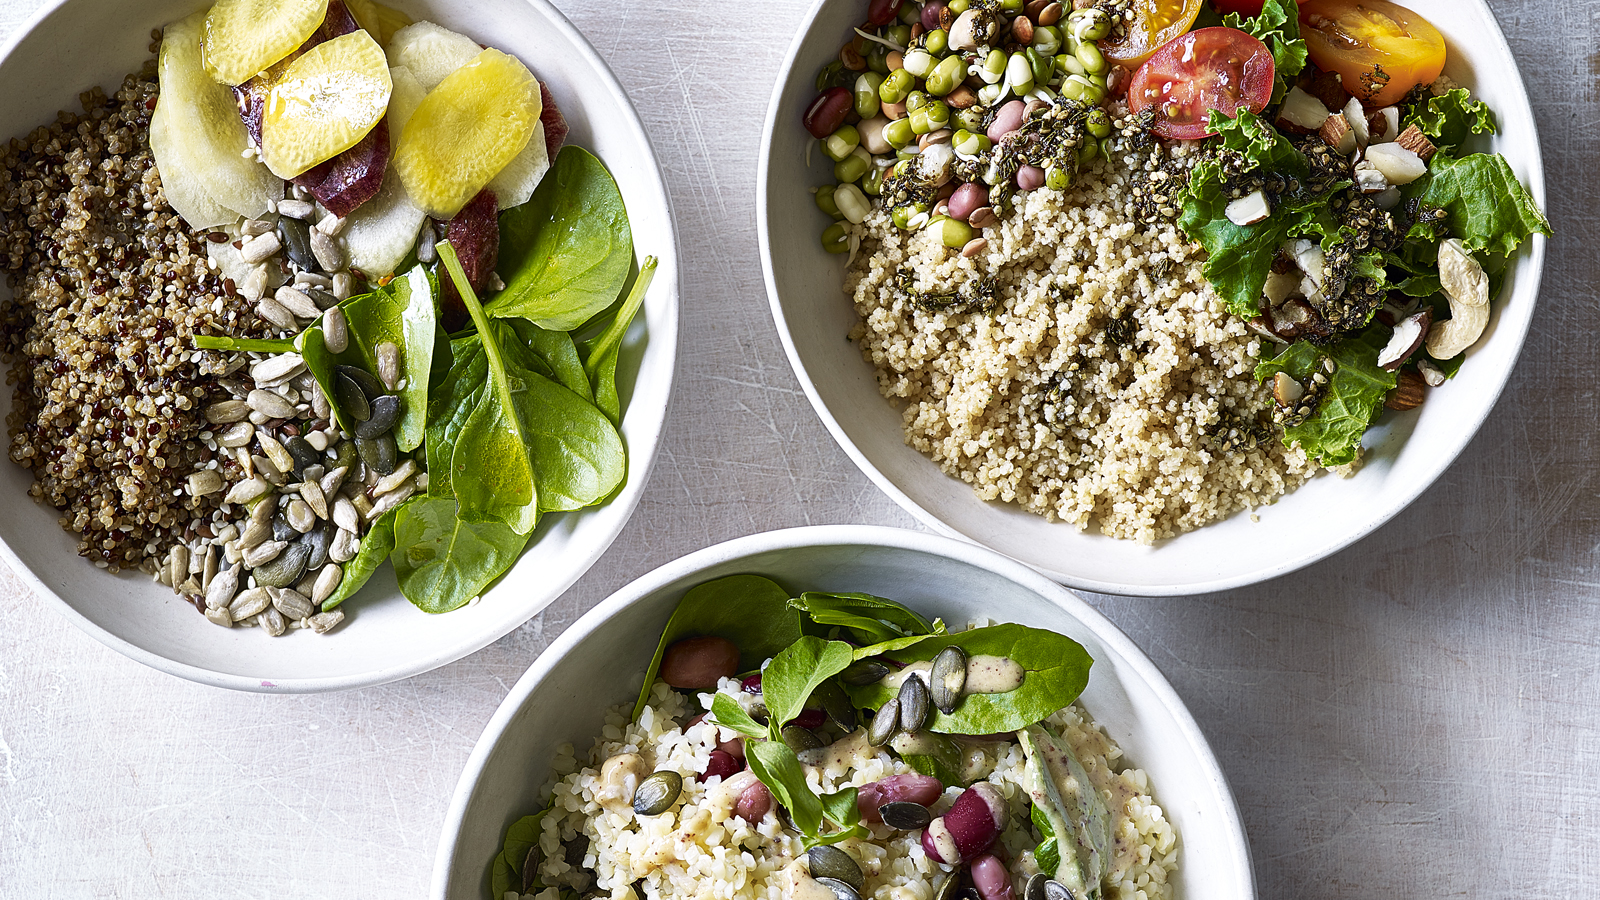 Make-Ahead Salad Bowls